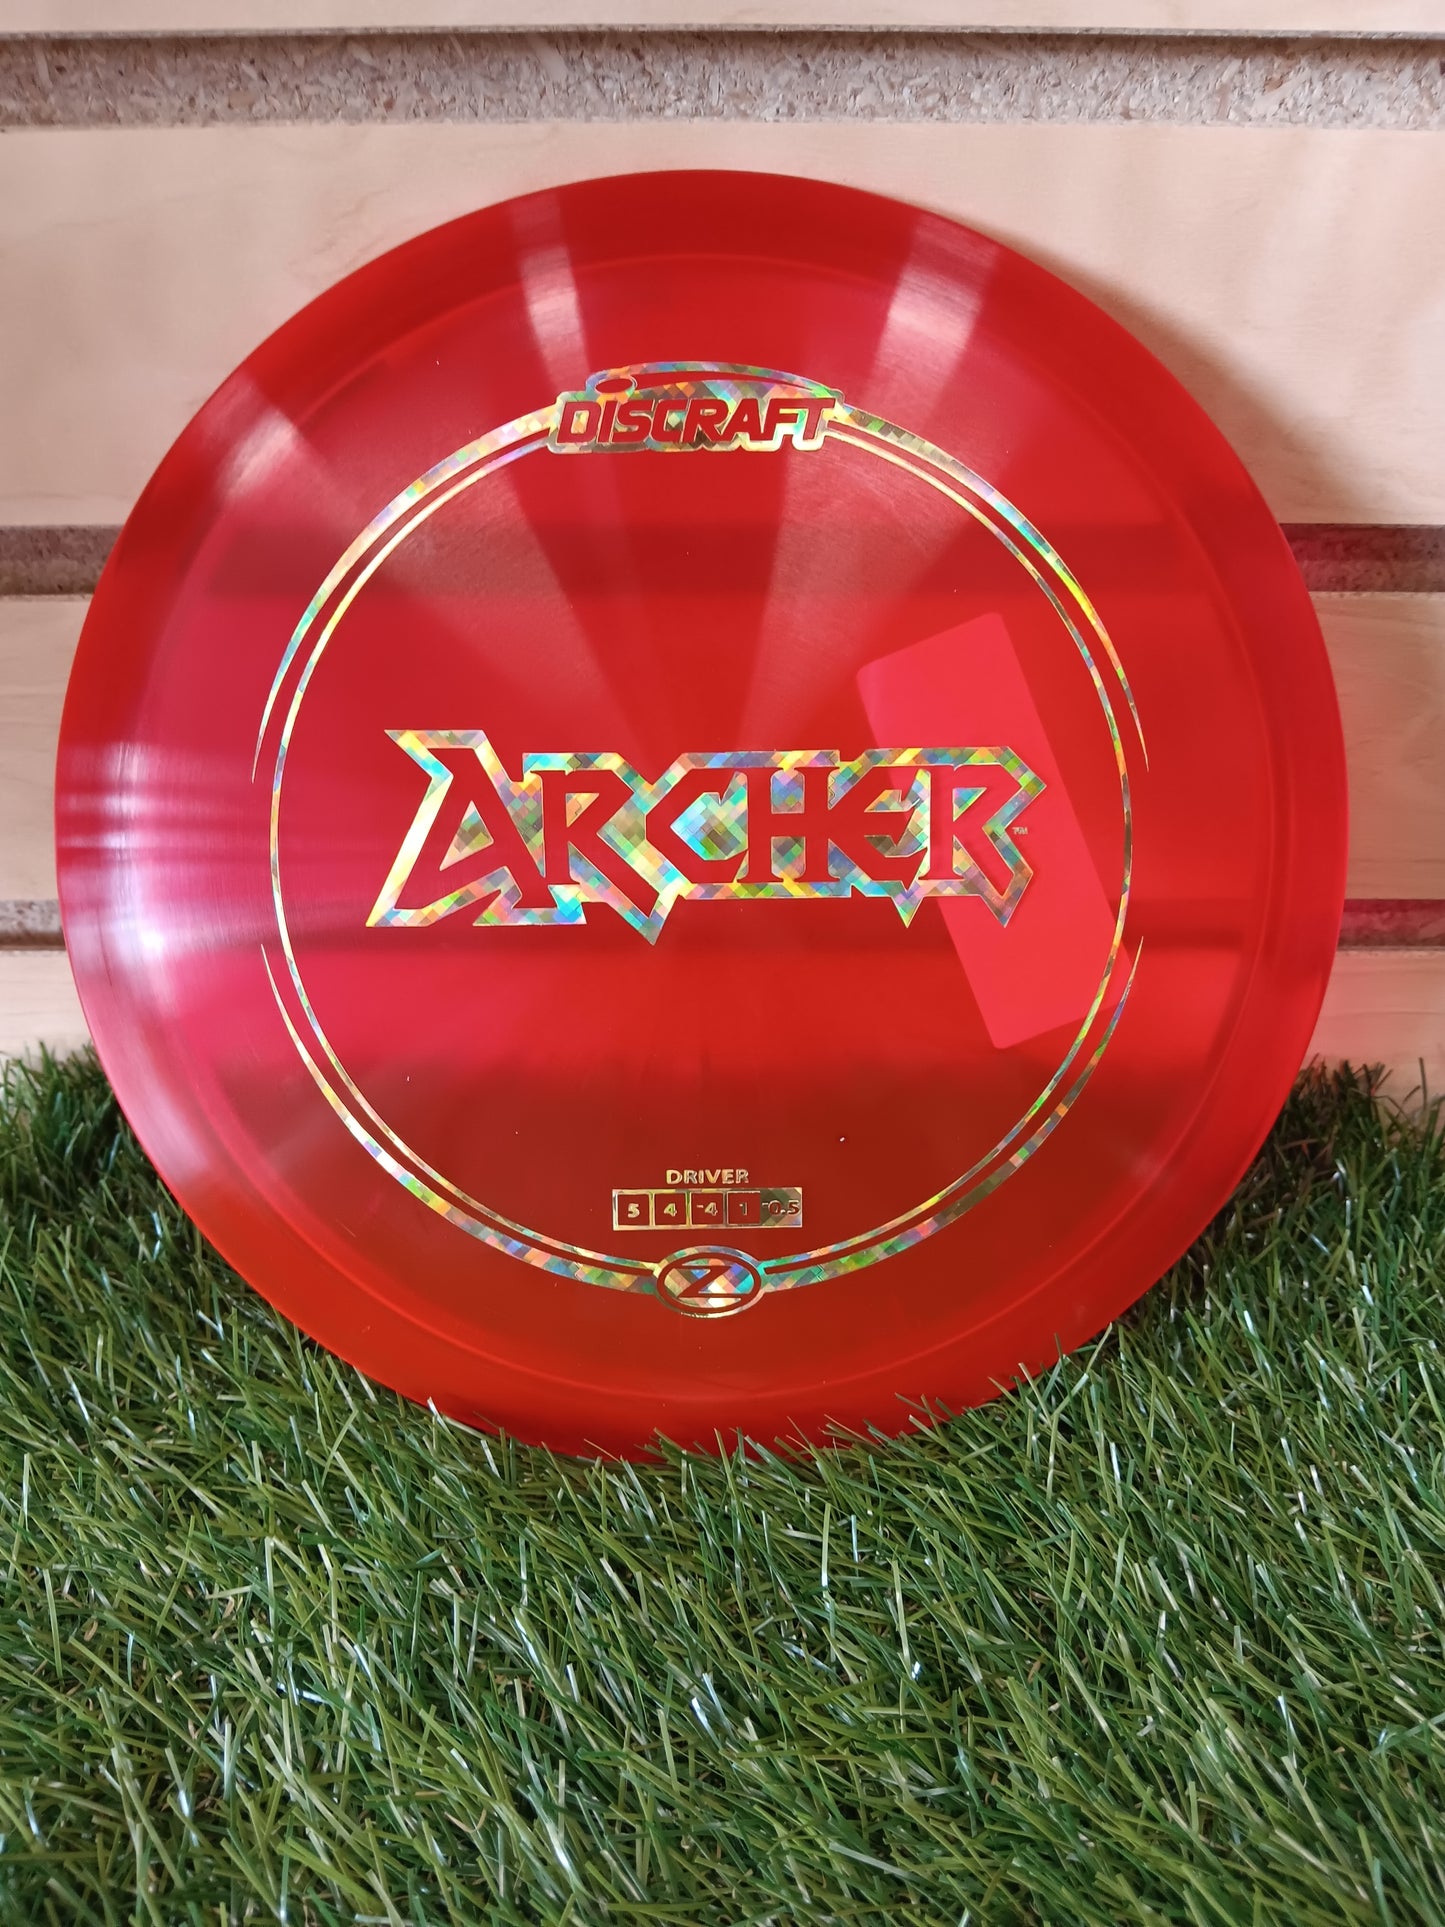 Discraft Z Archer - DiscIn